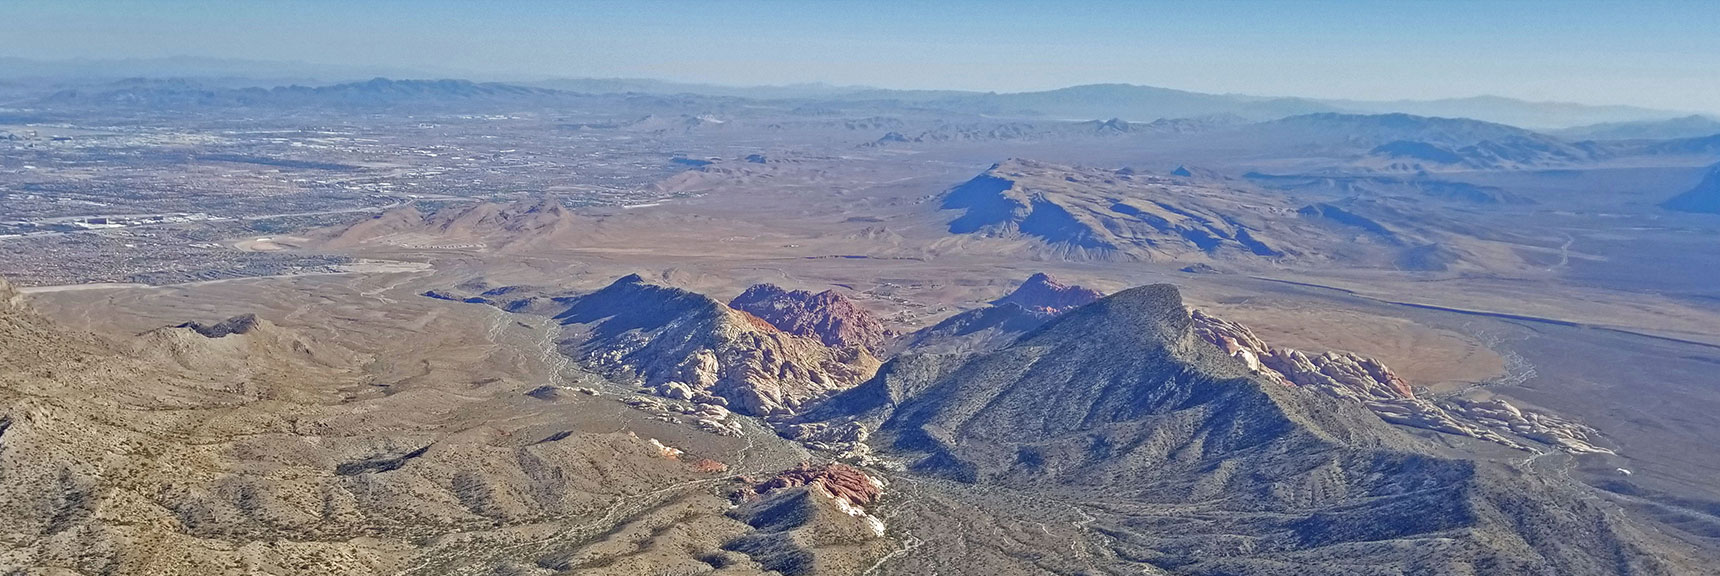 Las Vegas Valley, Calico Hills, Turtlehead Peak and Blue Diamond Mt | La Madre Mountain,, El Padre Mountain, Burnt Peak | La Madre Mountains Wilderness, Nevada